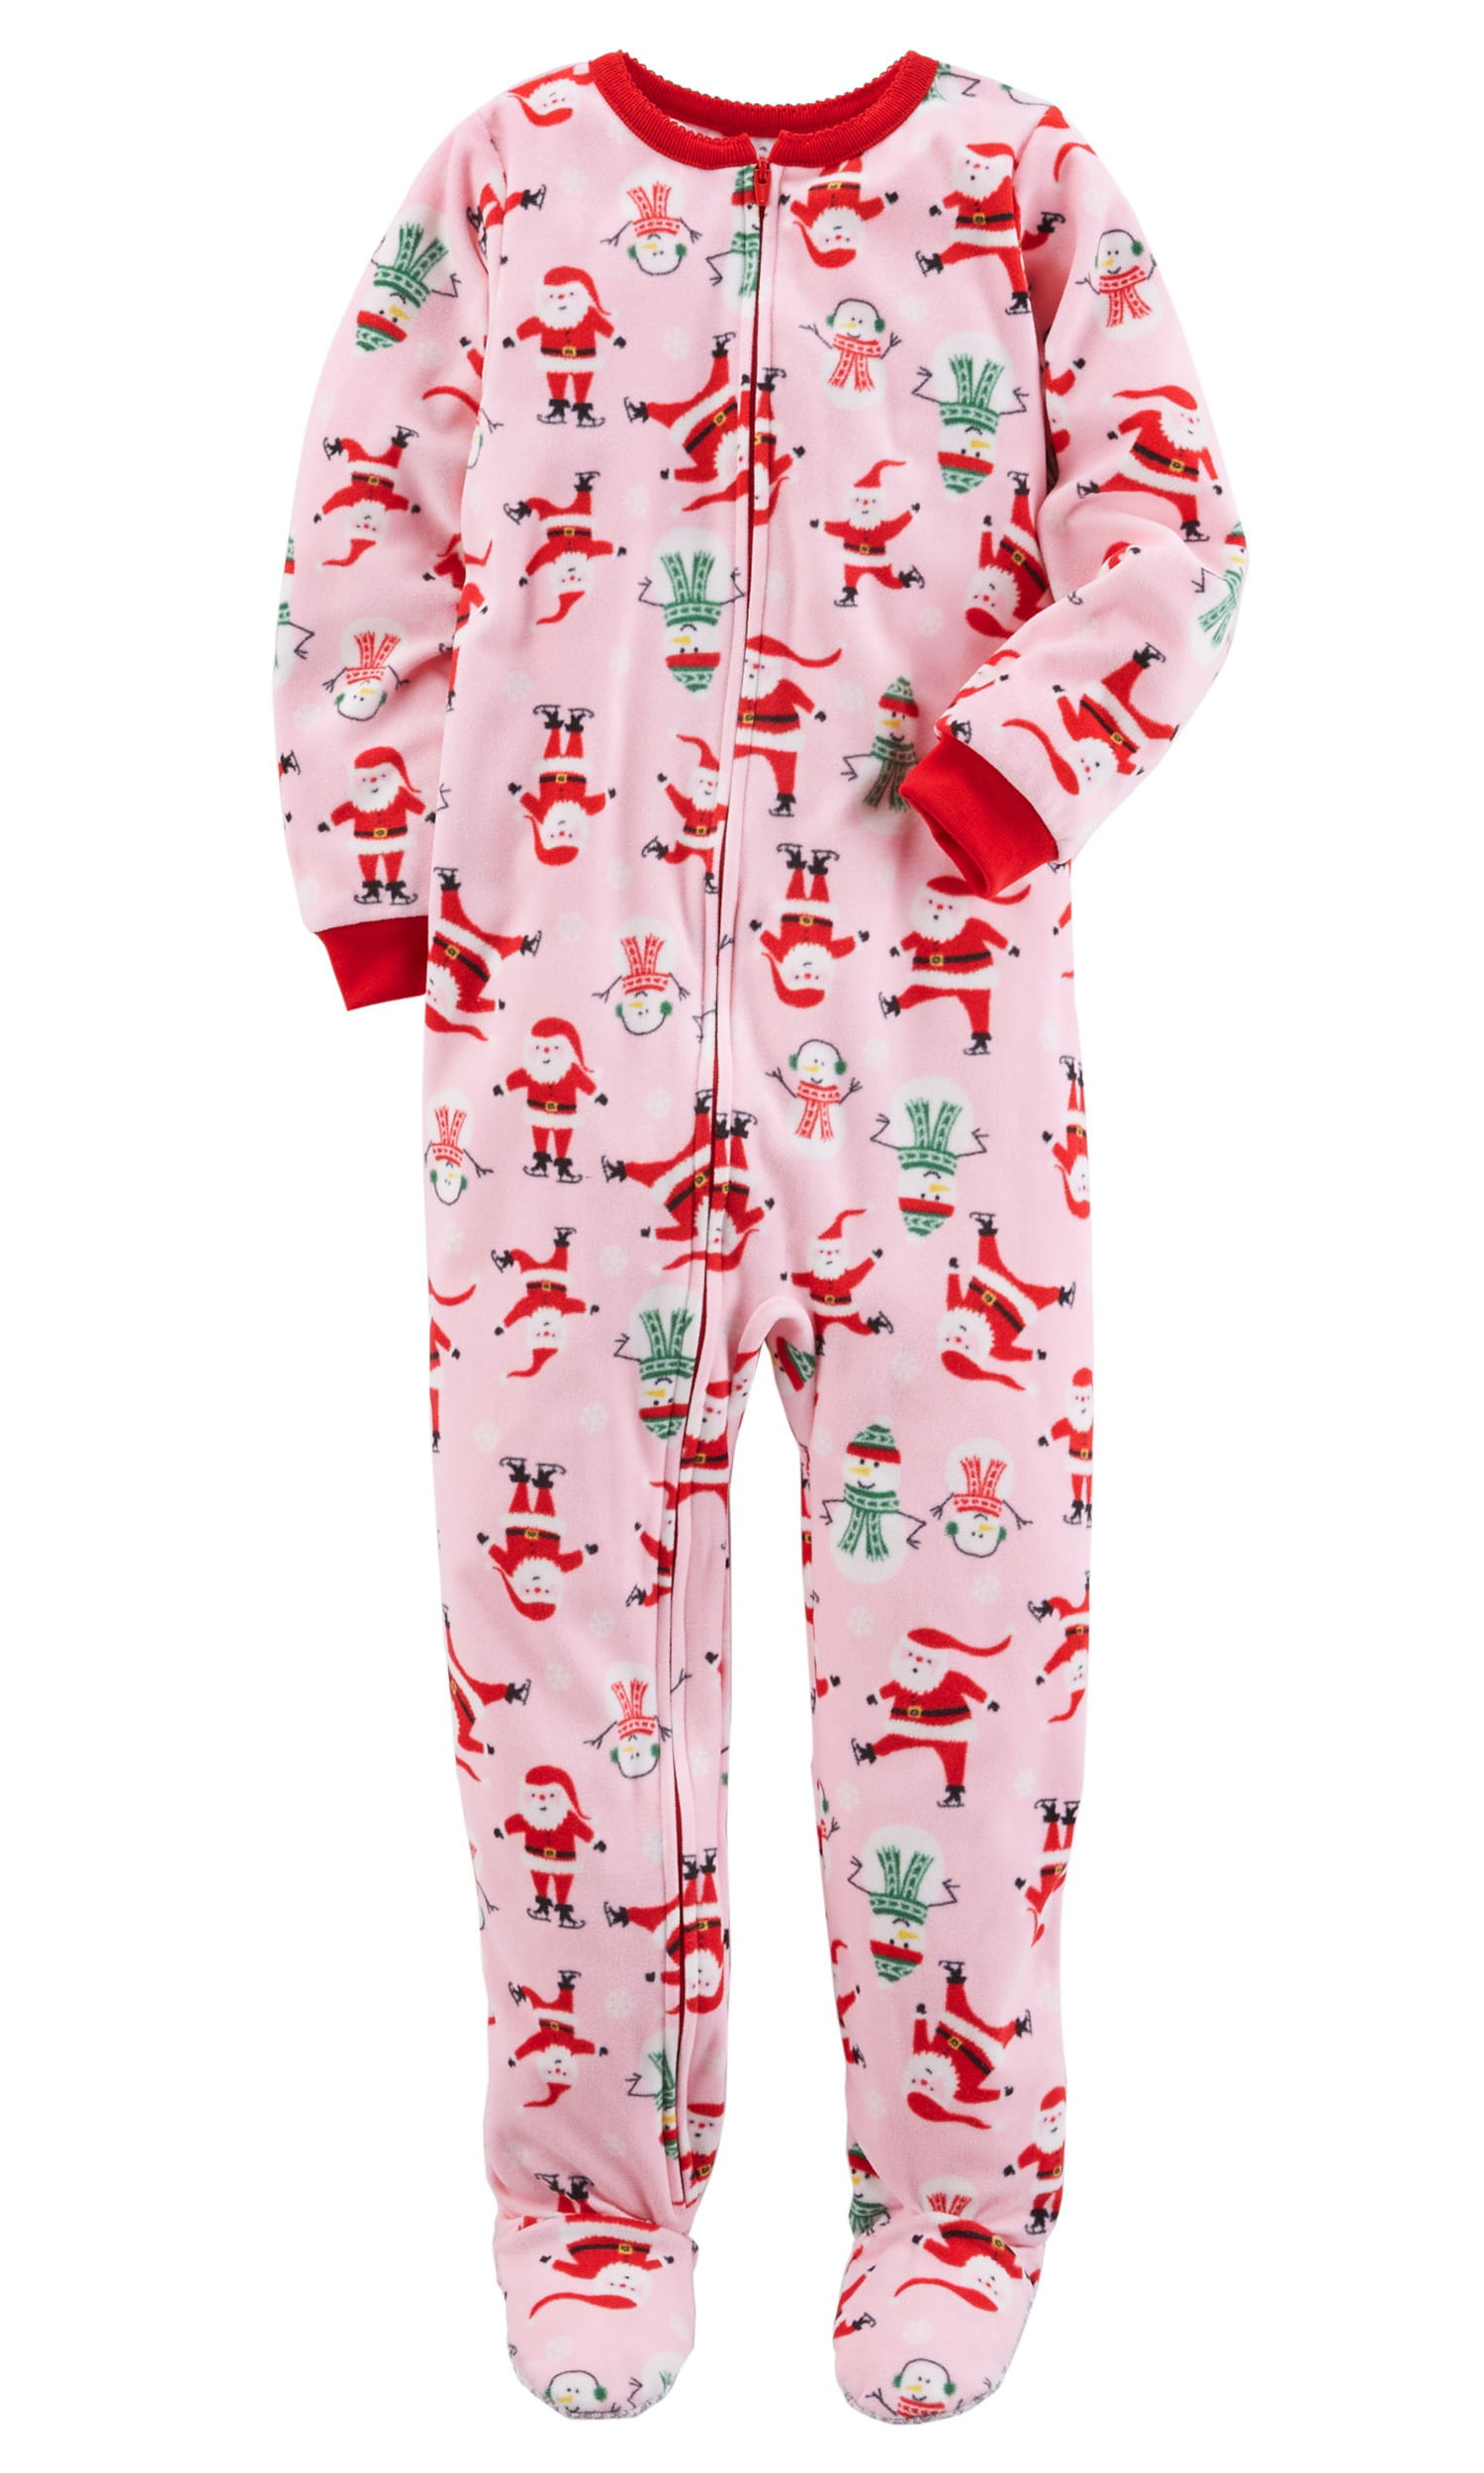 Carter's Carter's Baby Girls' One Piece Fleece Pajama, 3 Months